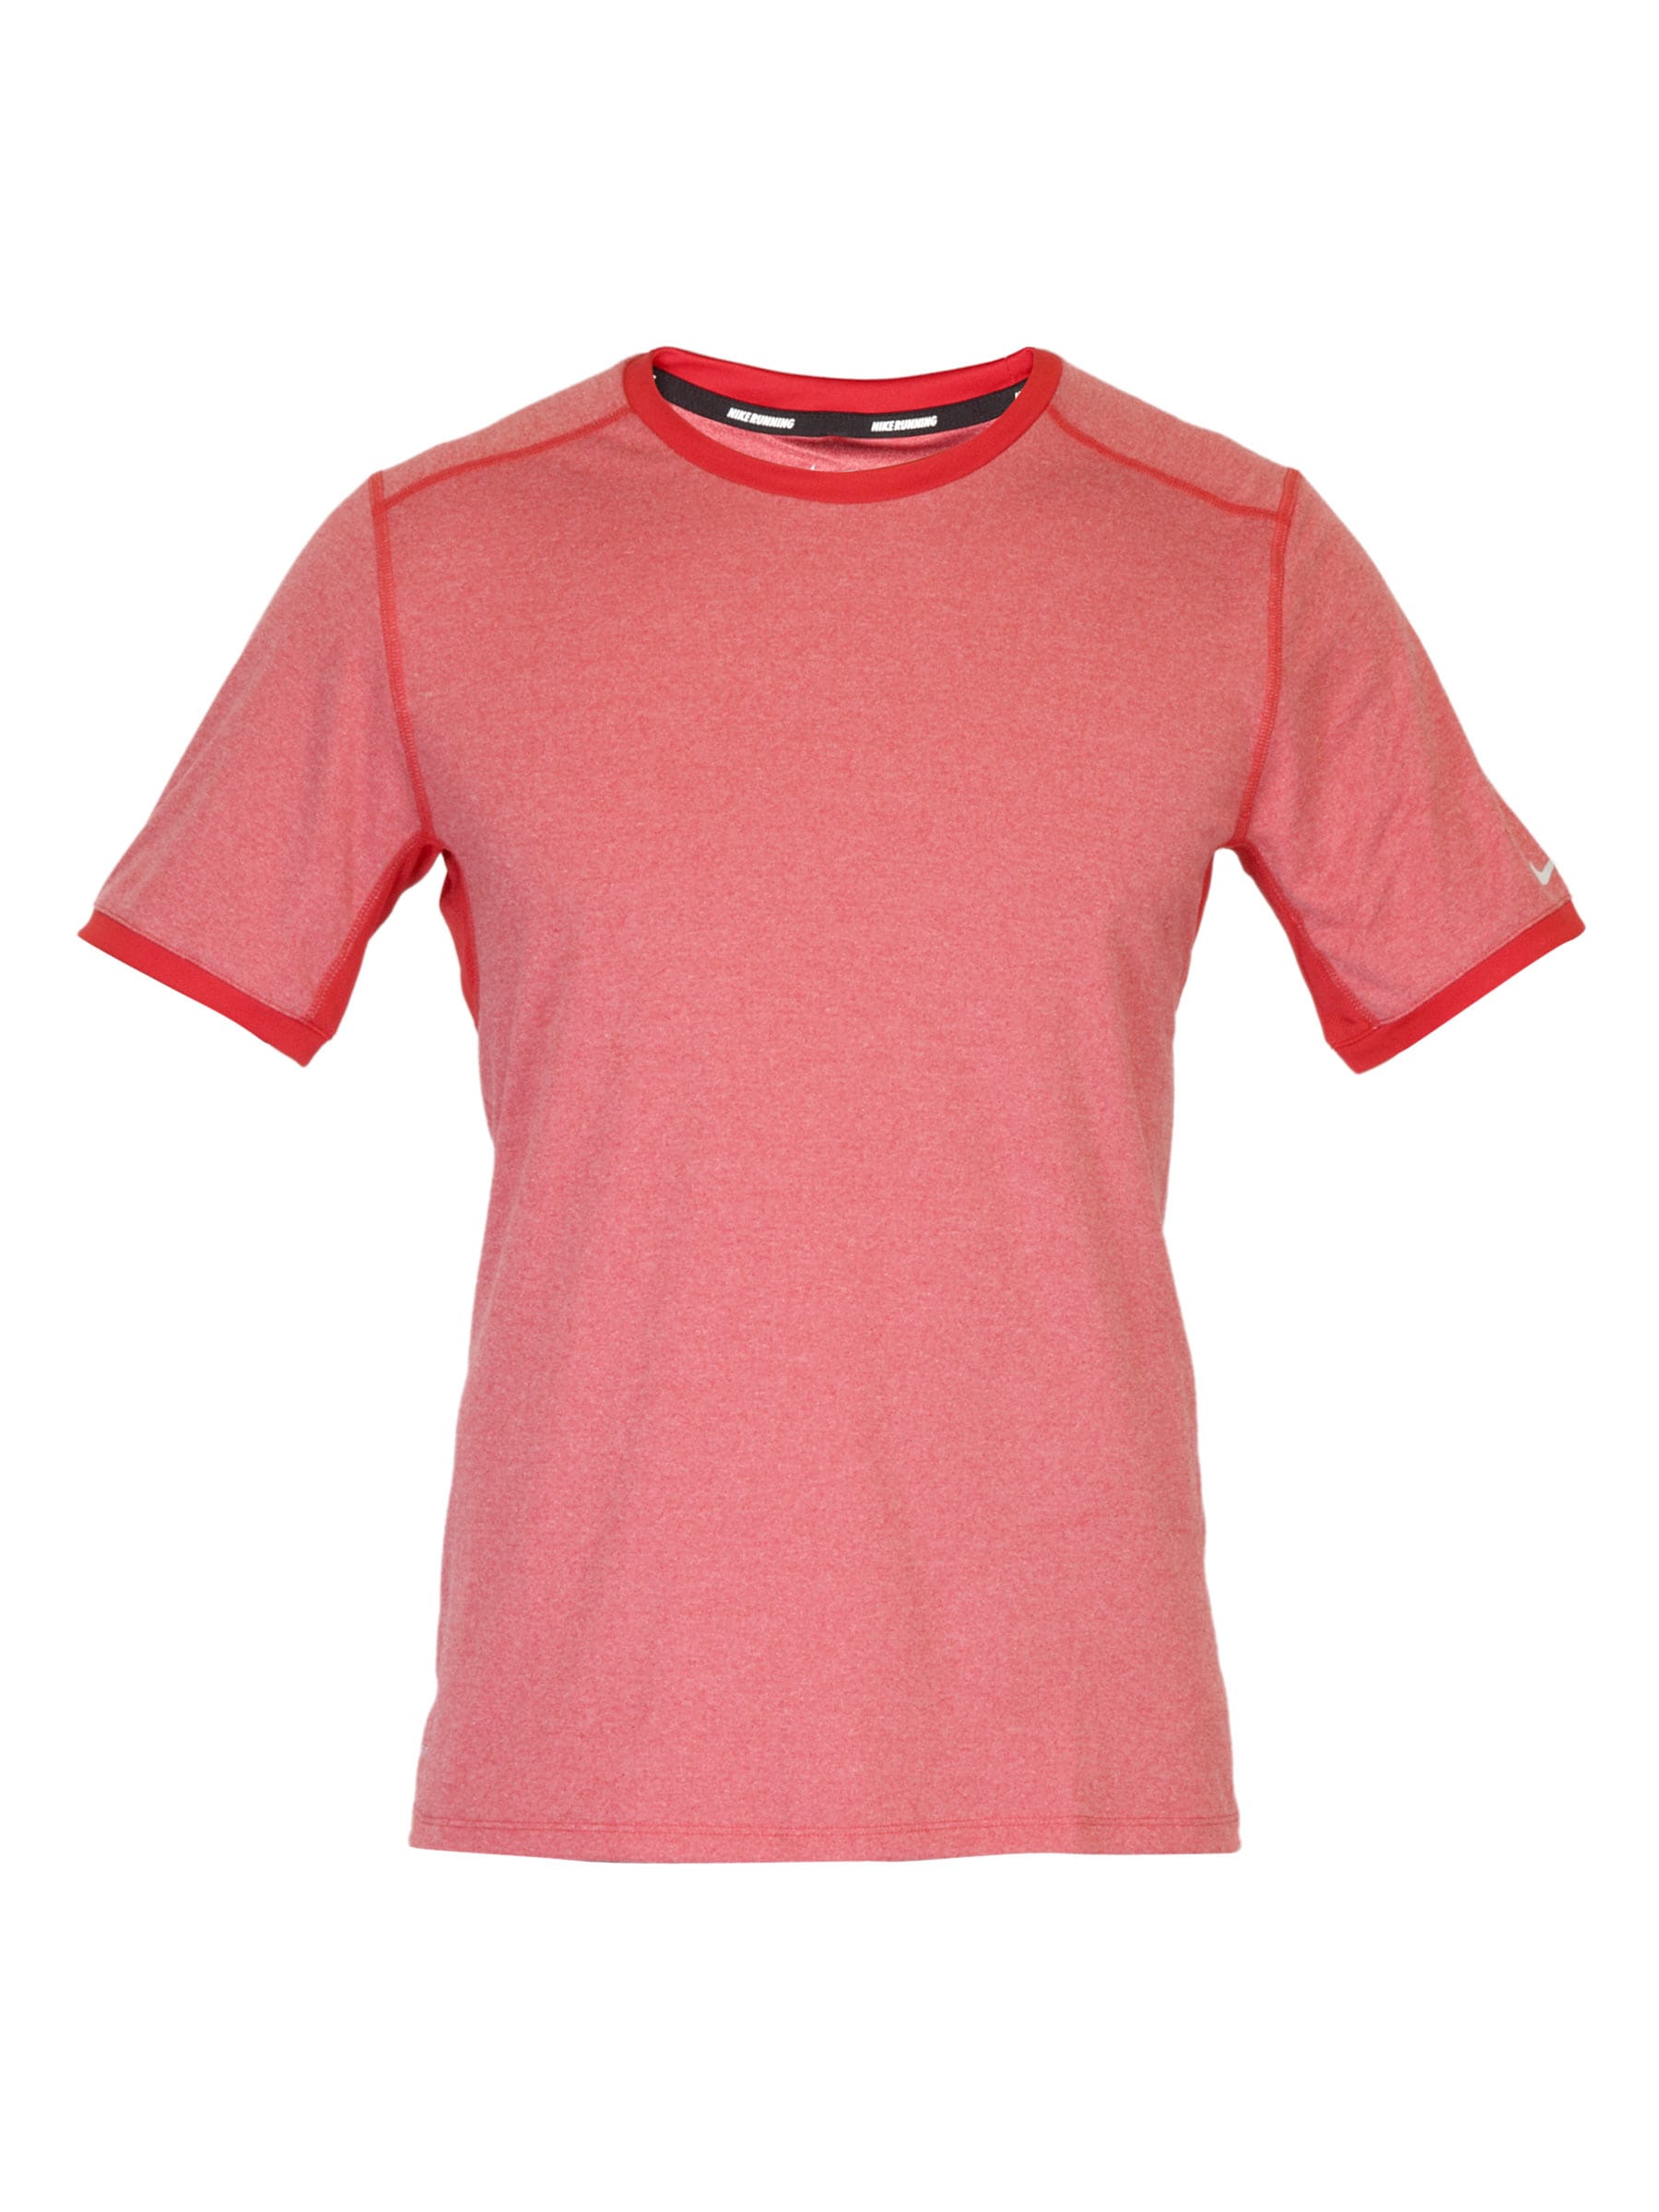 Nike Men Relay Red T-shirt